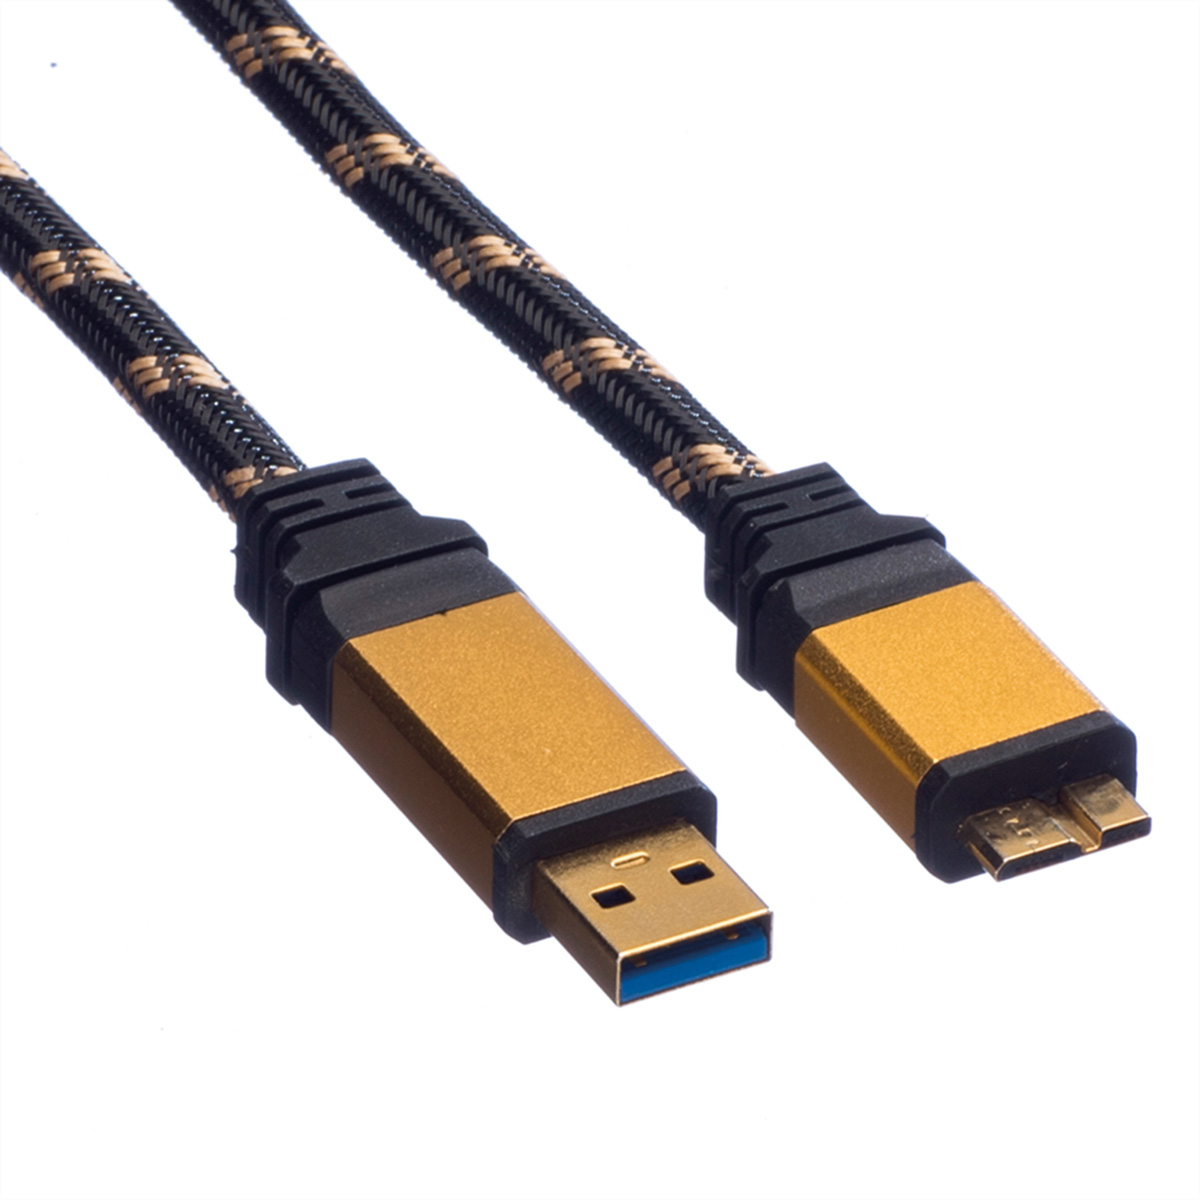 3.2 ST/ST USB 3.2 1 GOLD Kabel, ROLINE A Micro Gen Kabel USB Micro USB - B,